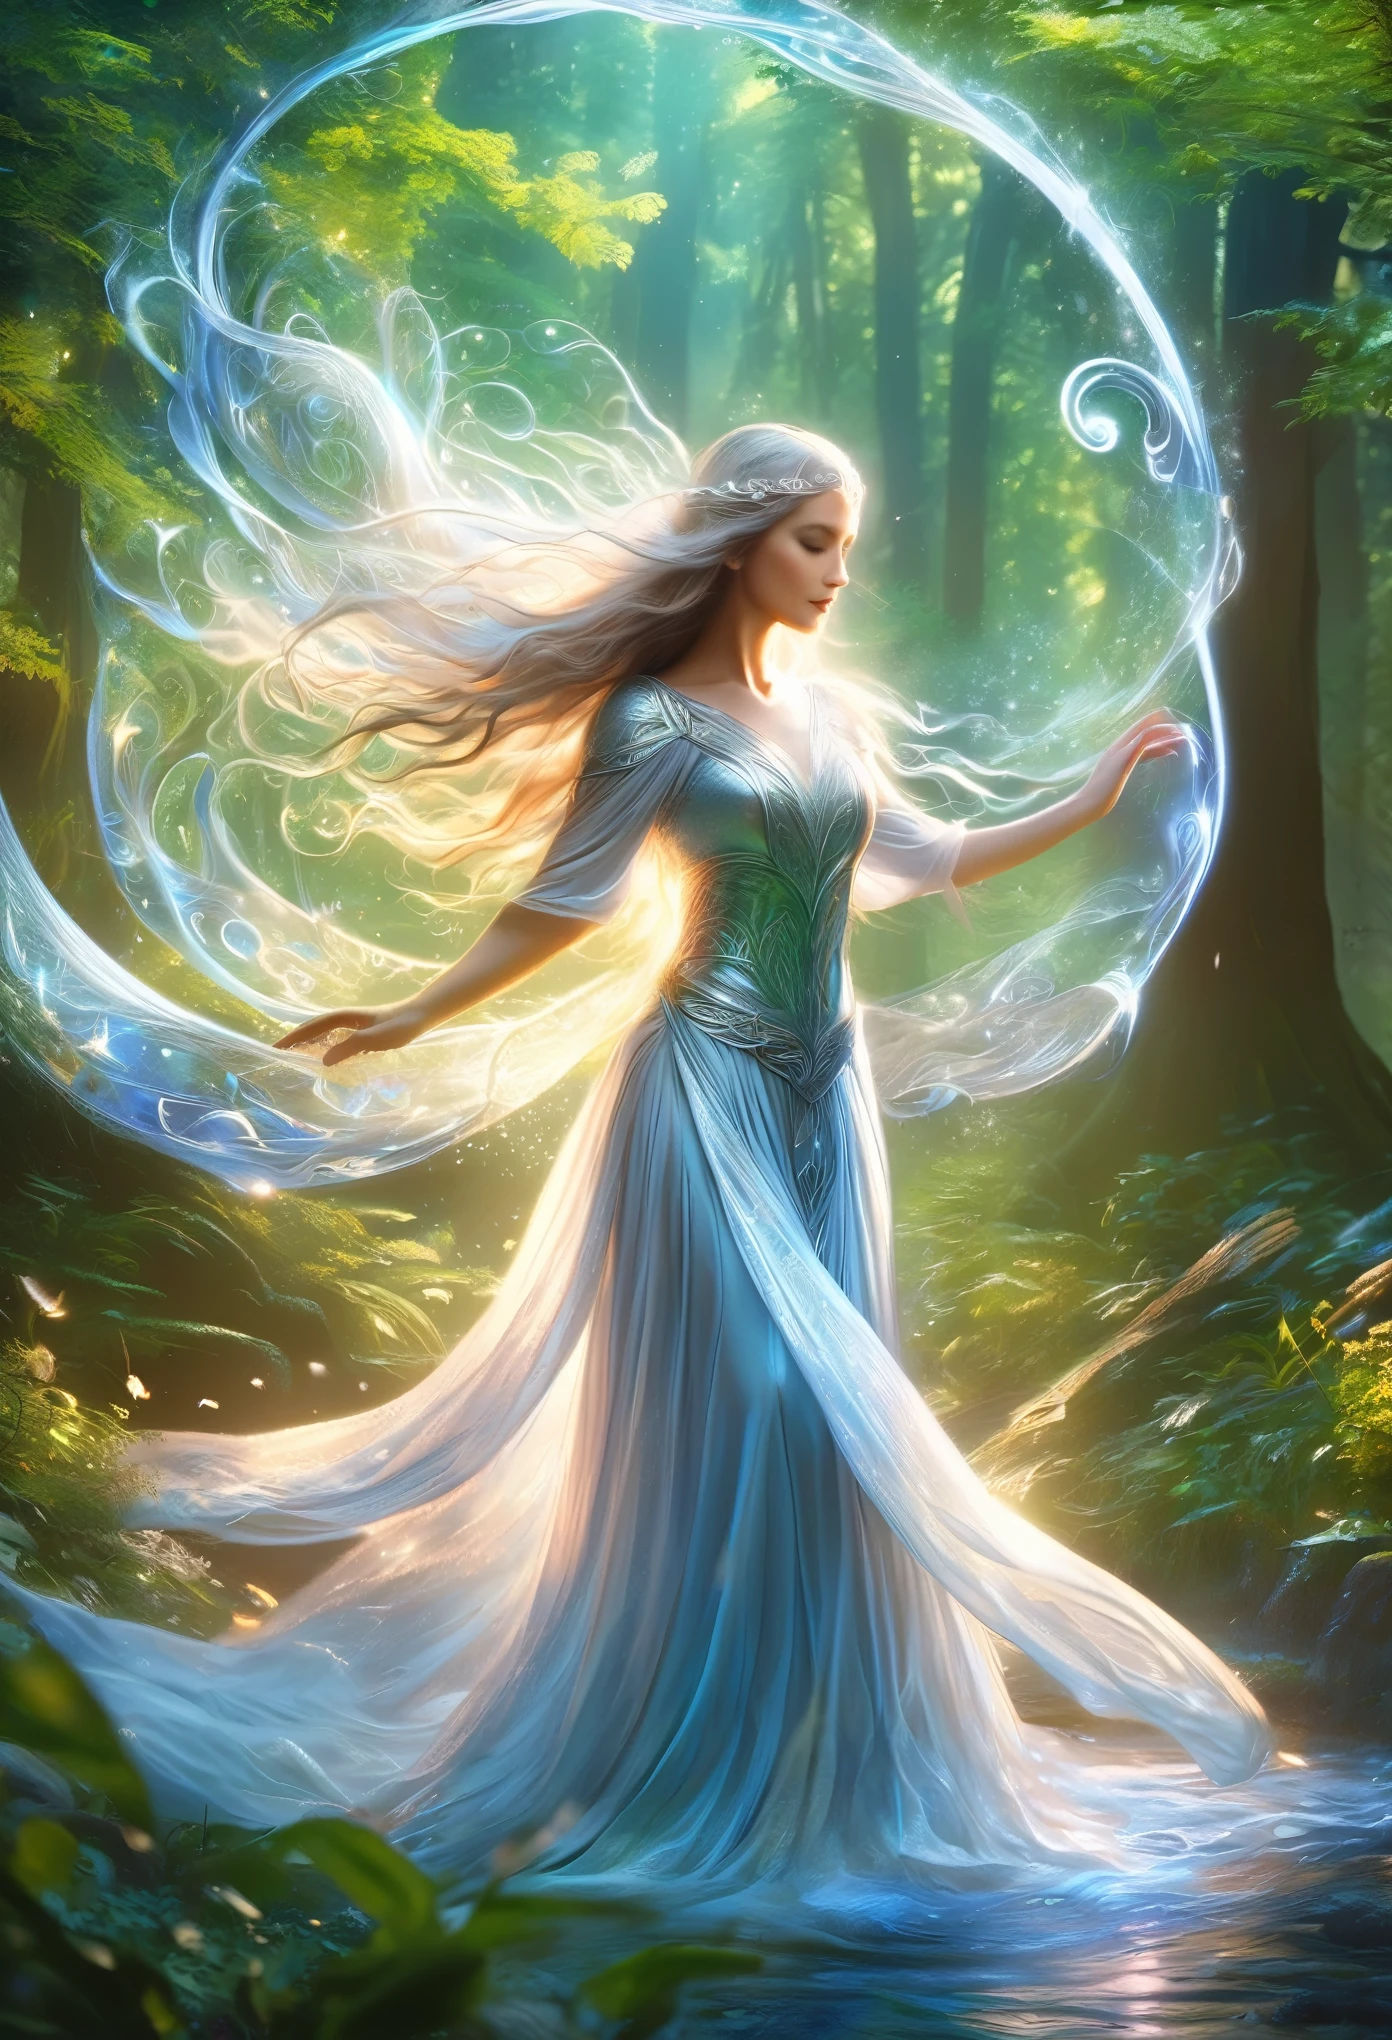 (最好的质量,4K,8千,高分辨率,杰作:1.2), 极其详细, (实际的,photo实际的,photo-实际的:1.37), 在魔法森林的中心, 沐浴在透过树冠洒下的柔和月光中, 矗立着一位空灵美丽的身影. 她是一个精灵女巫师, 一头银色长发在她纤细的身躯周围闪闪发光，就像一缕缕月光编织成的丝绸. 她的眼睛, 令人着迷的彩虹色混合, 闪耀着超凡脱俗的光芒, 反射着周围森林的五彩缤纷的色彩. 它们是通向灵魂的窗户，就像树木一样古老, 充满了超越她幼小年龄的智慧和神秘. 身着飘逸的白色长袍，上面装饰着复杂的银线图案, 她的动作优雅而轻松. 每一个动作都是一场舞蹈, 流畅的运动似乎在空气中荡漾，就像水流过光滑的石头一样. 当她将纤细的双手举向天空时, 她周围的空气充满着神奇的能量, 森林的本质回应了她的呼唤. 充满力量的话语从她的嘴唇中流淌出来，就像液态银一样, 古老的咒语在寂静的夜空中回荡，旋律萦绕心头. 每说一句话, 魔法能量的卷须开始围绕着她旋转, 在光与影的闪烁漩涡中交织在一起. 漩涡中开始形成形状, 纯粹魔法诞生的幻影生物随着她声音的节奏起舞. 当她咒语达到高潮时, 她的声音越来越高, 让森林充满力量和奇迹的交响乐. 她最后挥动双手, 她解除了咒语, 魔法能量汇聚成一道光芒，像千颗星星一样照亮黑暗.(天野喜孝的艺术作品:1.3)